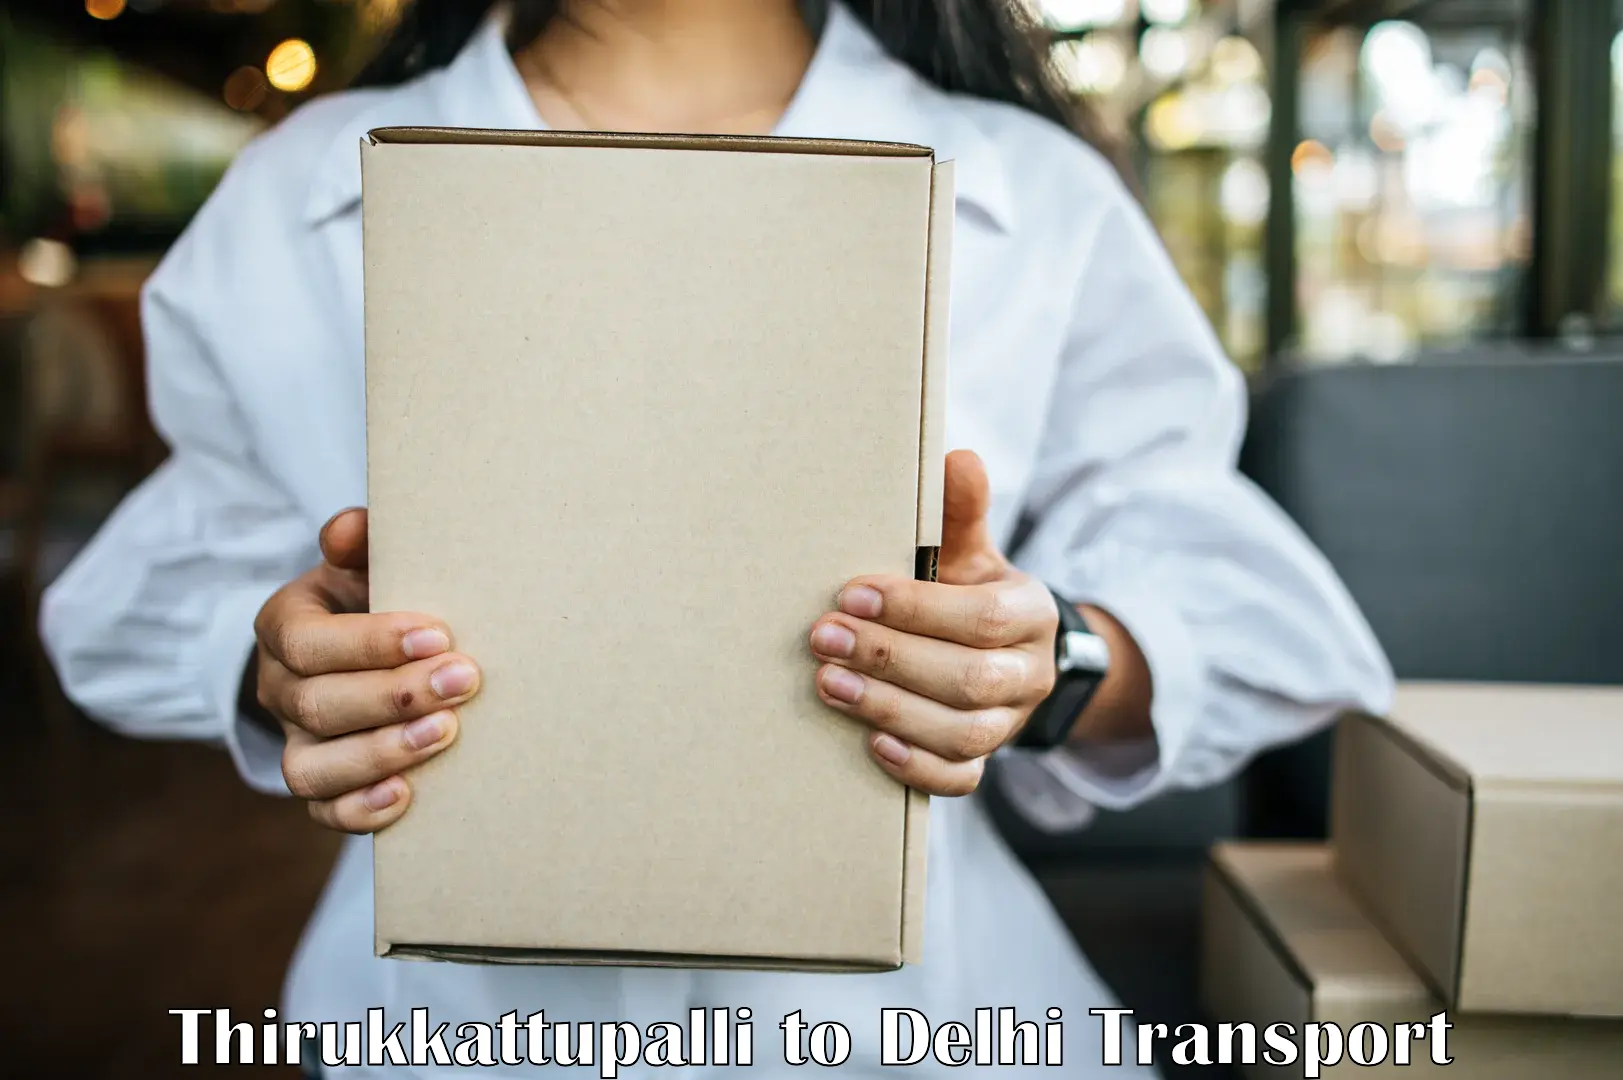 Commercial transport service Thirukkattupalli to Delhi